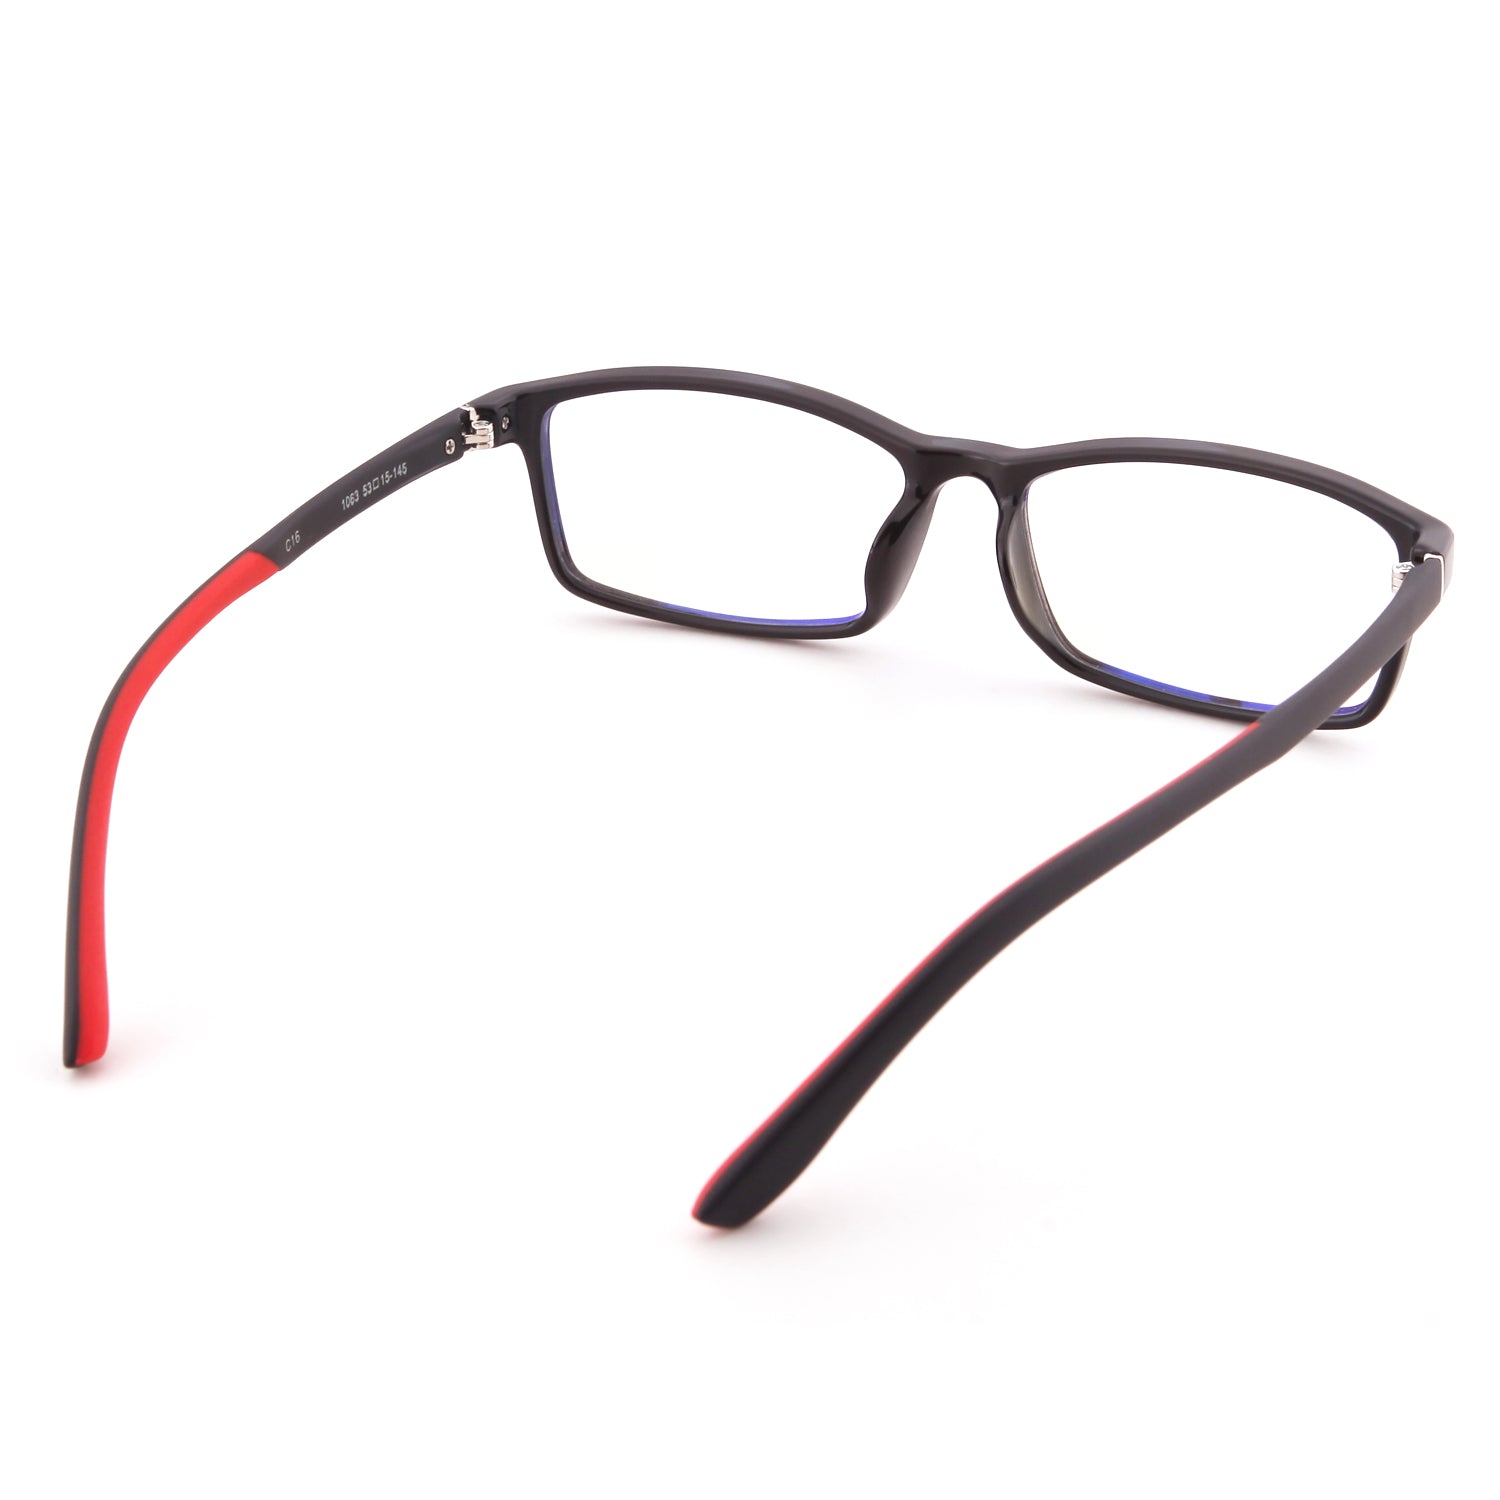 Mind Bridge Big Kids and Teens Computer Glasses (Black Red) - CrystalHillGlasses.com